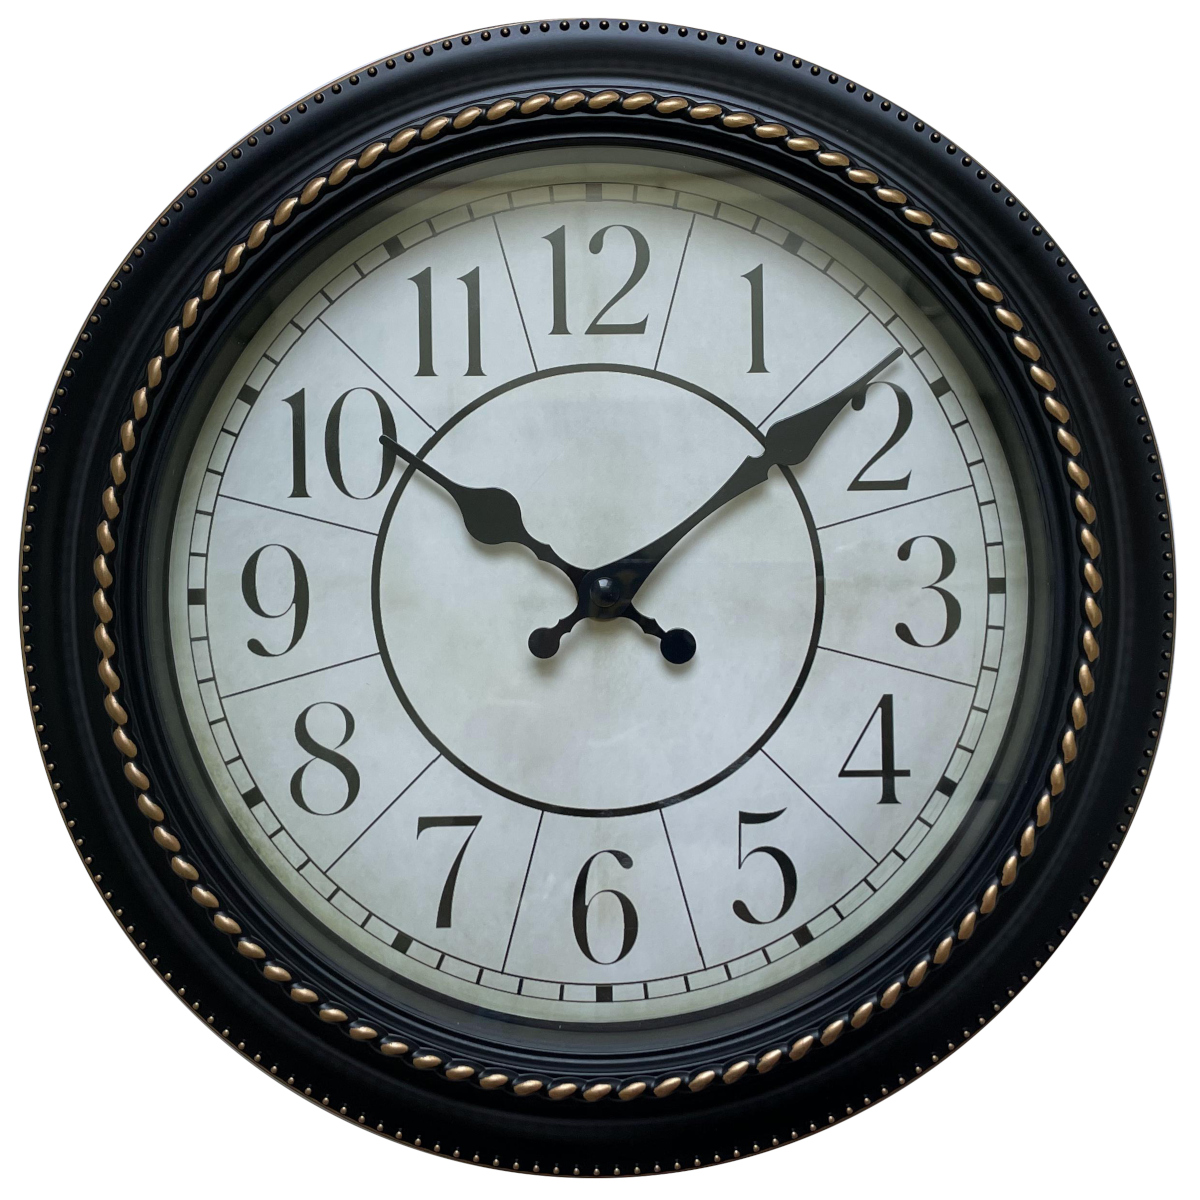 Artelibre Ρολόι Τοίχου Μαύρο Πλαστικό Φ27.6x4.8cm